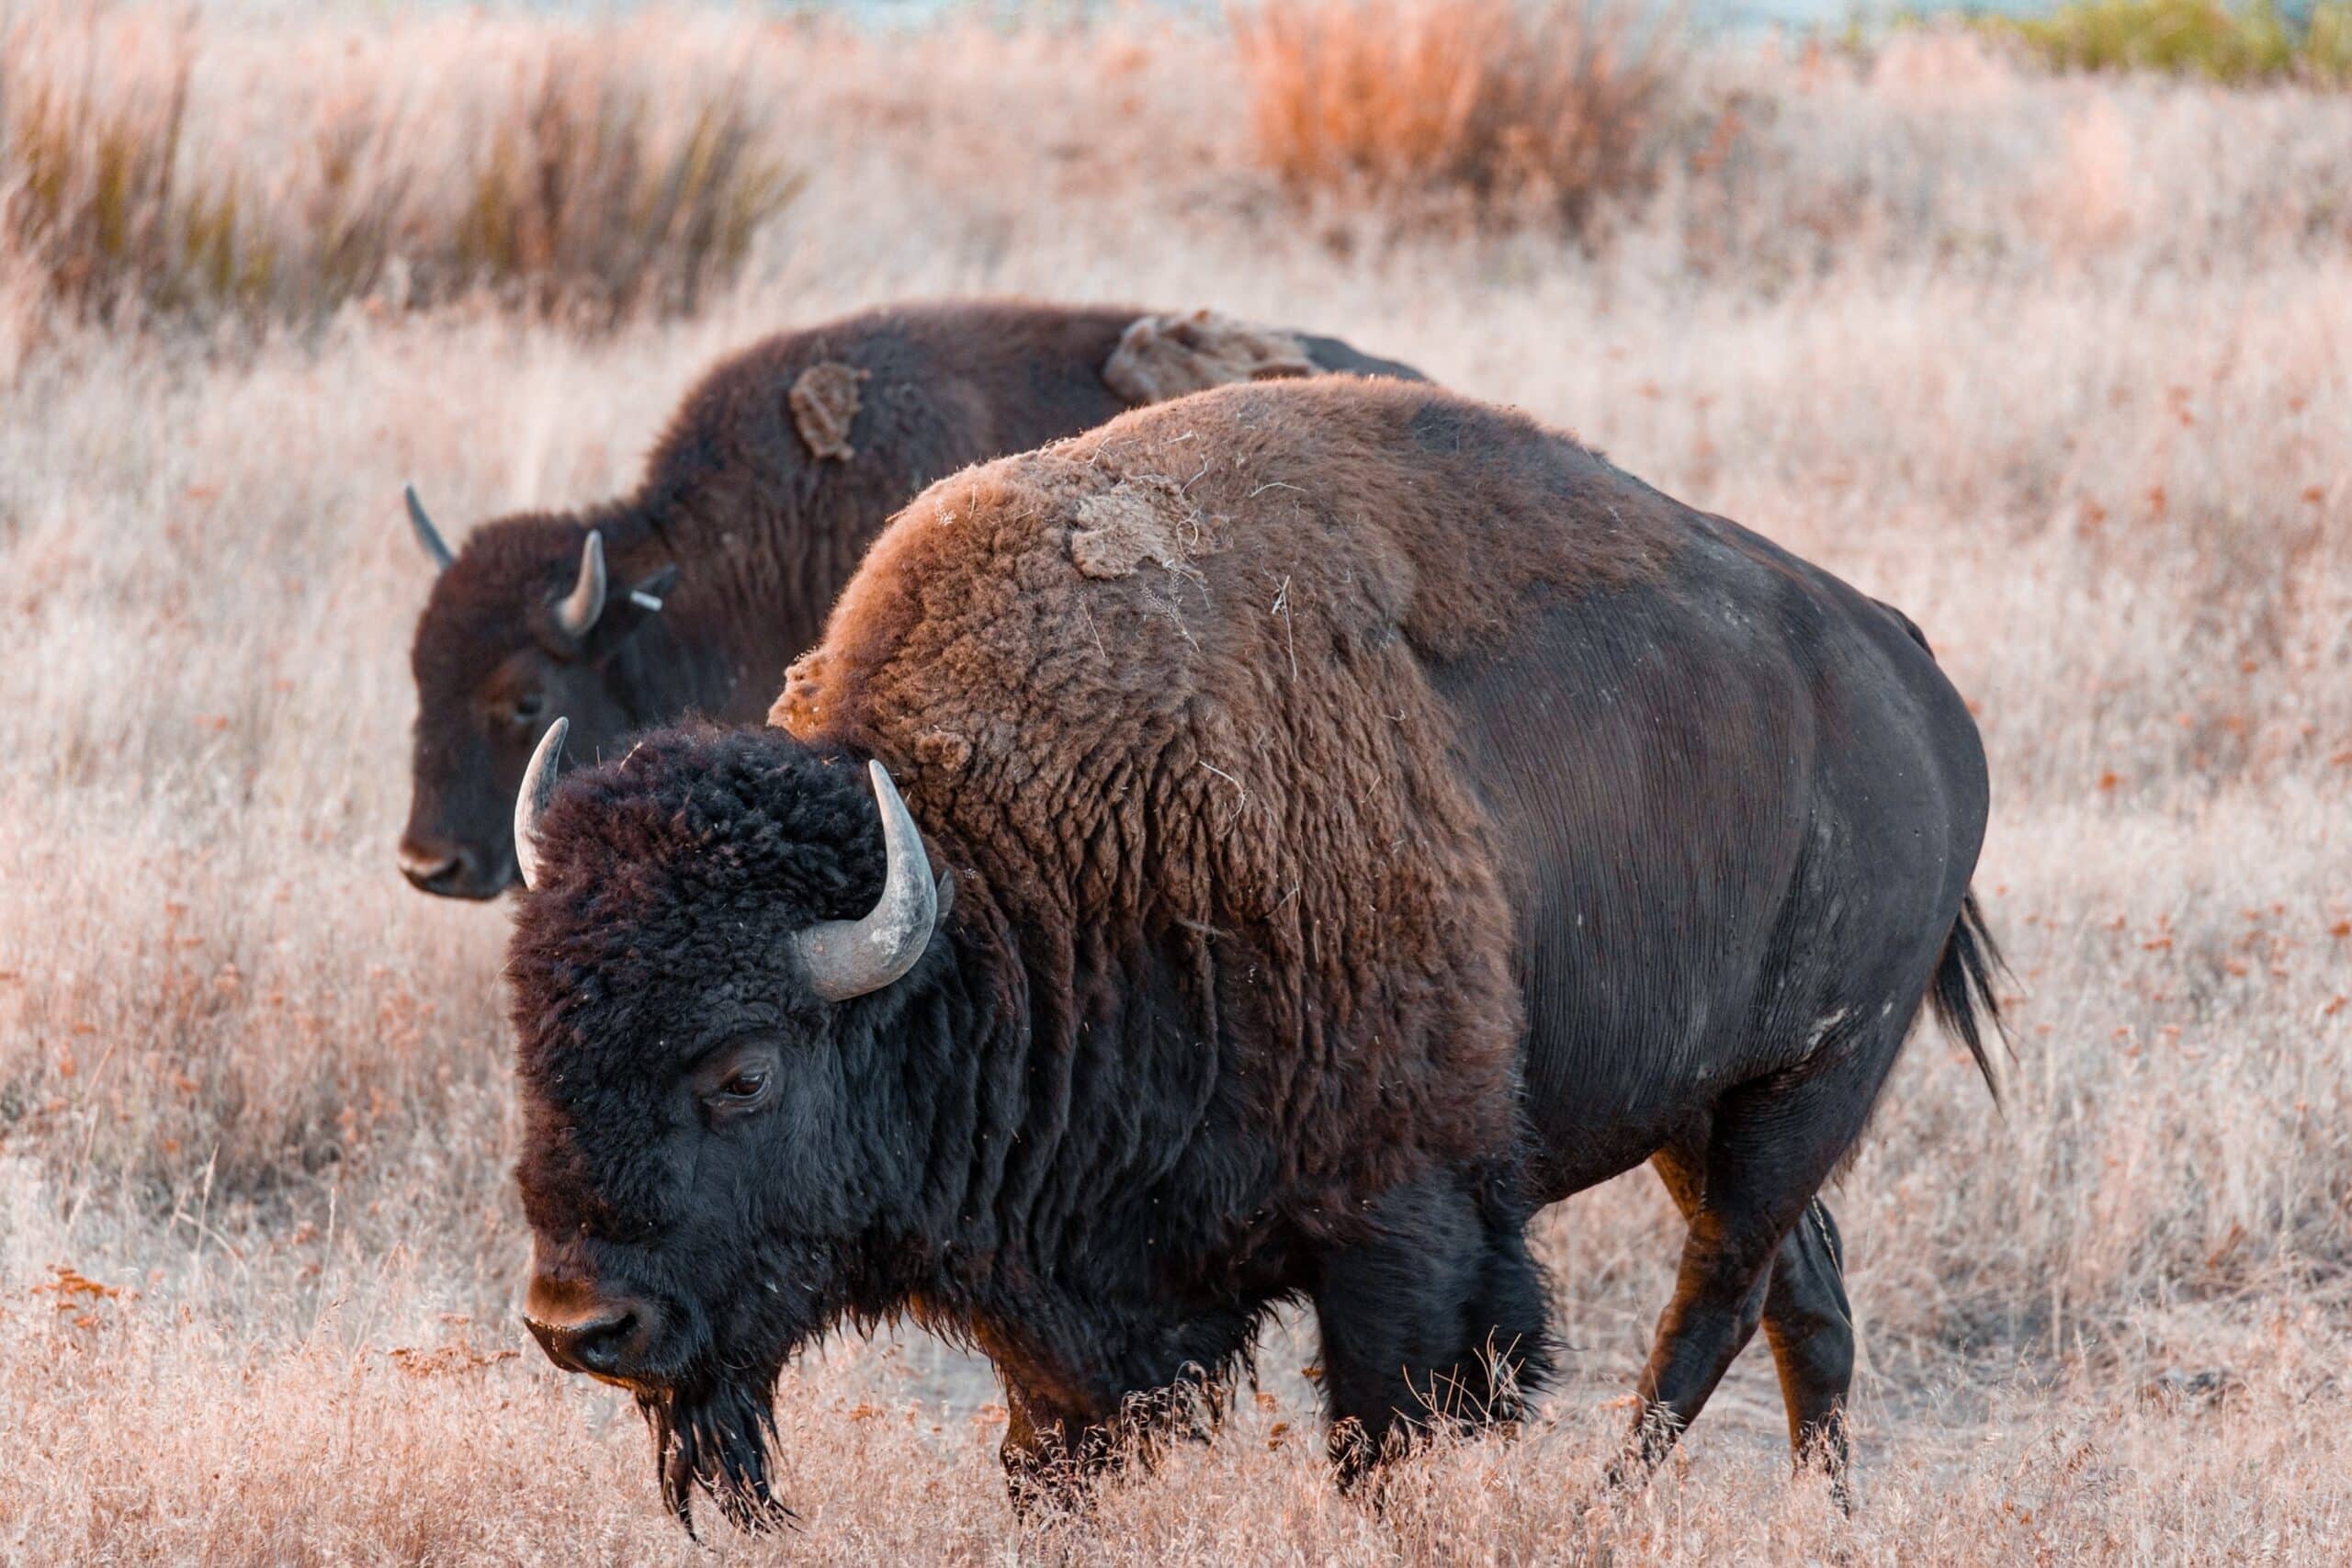 bisonte europeo animales peligro extinción Europa